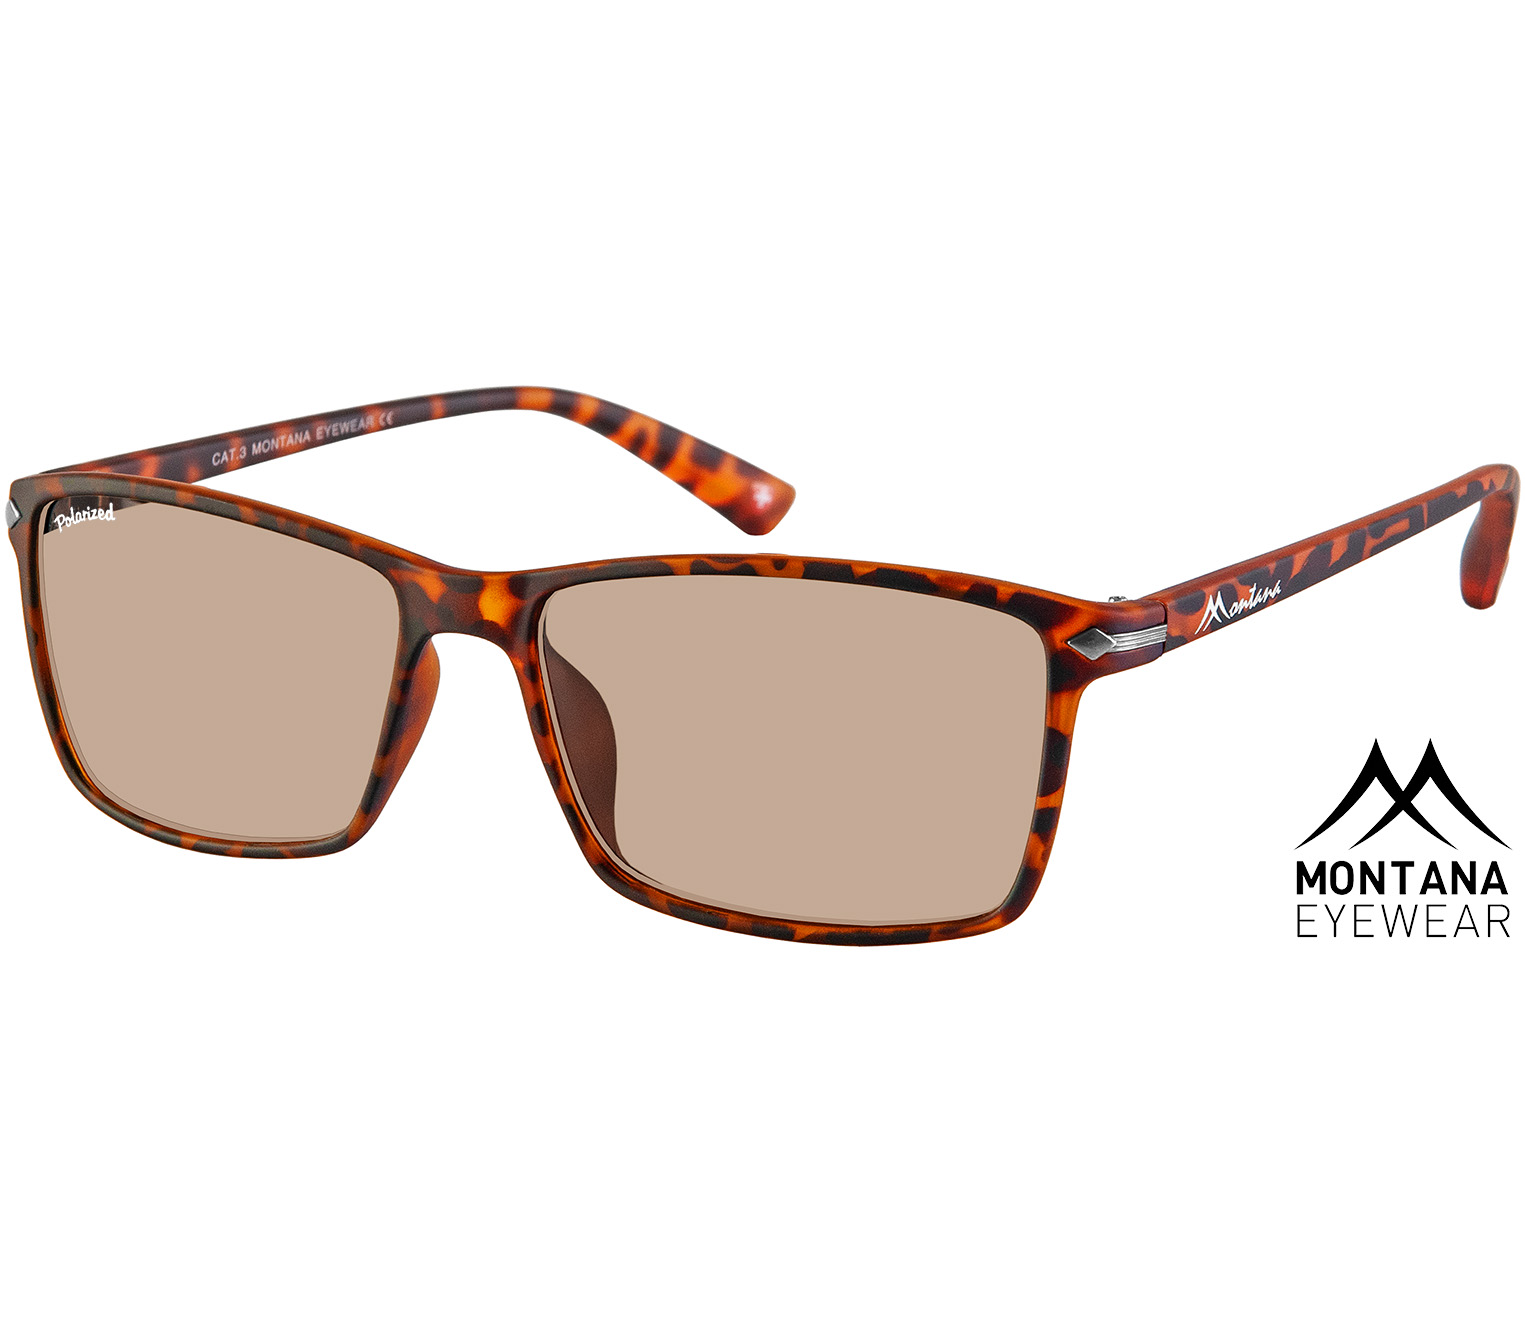 Main Image (Angle) - Horizon (Tortoiseshell) Sunglasses